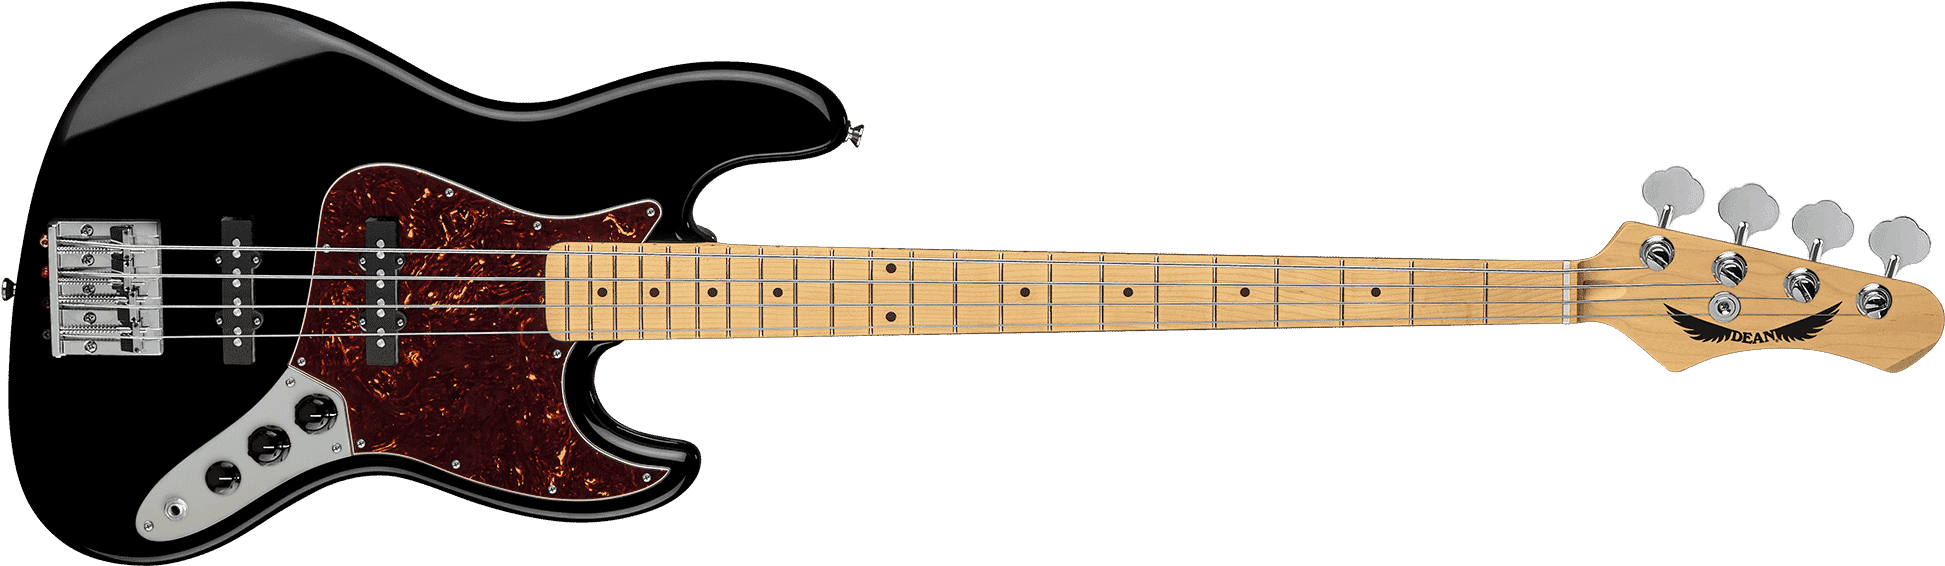 Juggernaut - Fender Stratocaster Deluxe Sunburst (2000x623), Png Download